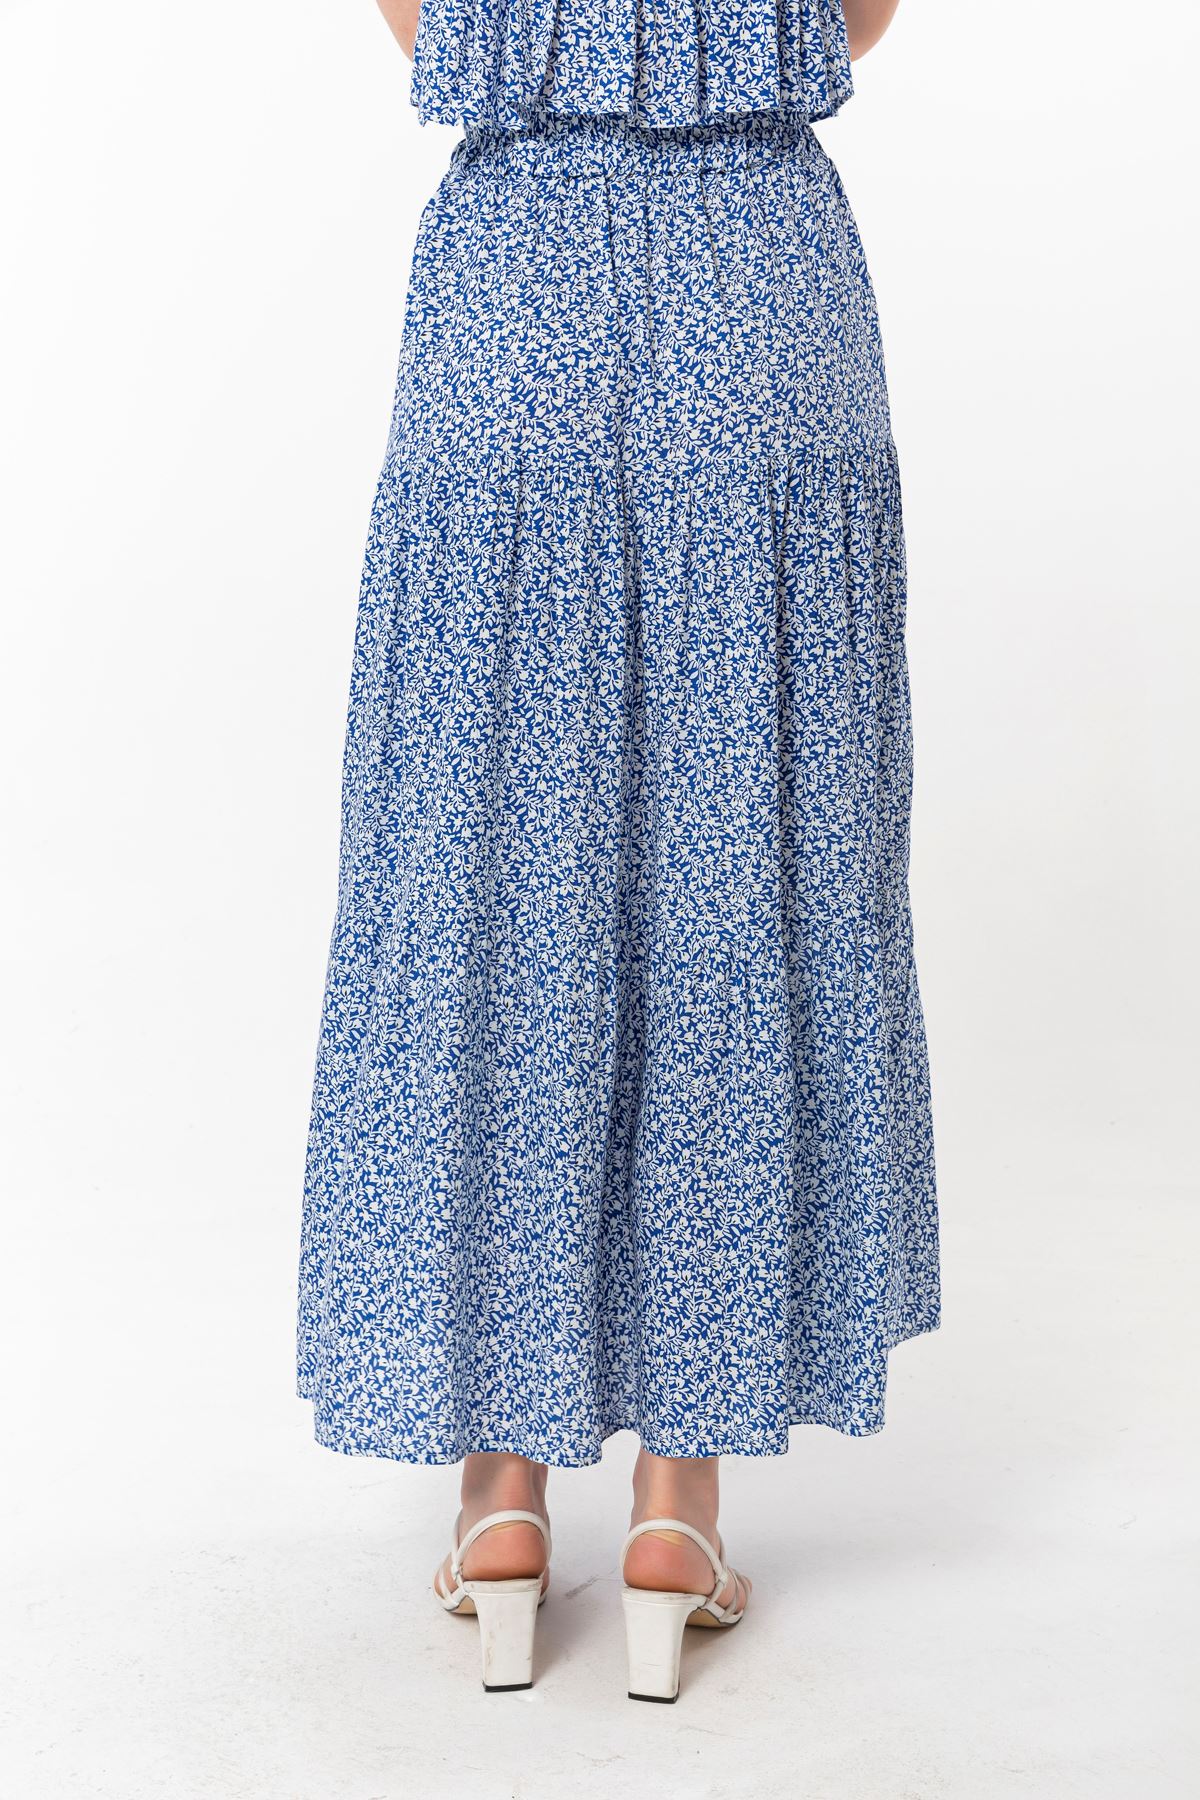 Viscose Fabric Long Comfy Fit Floral Print Women'S Skirt - Blue